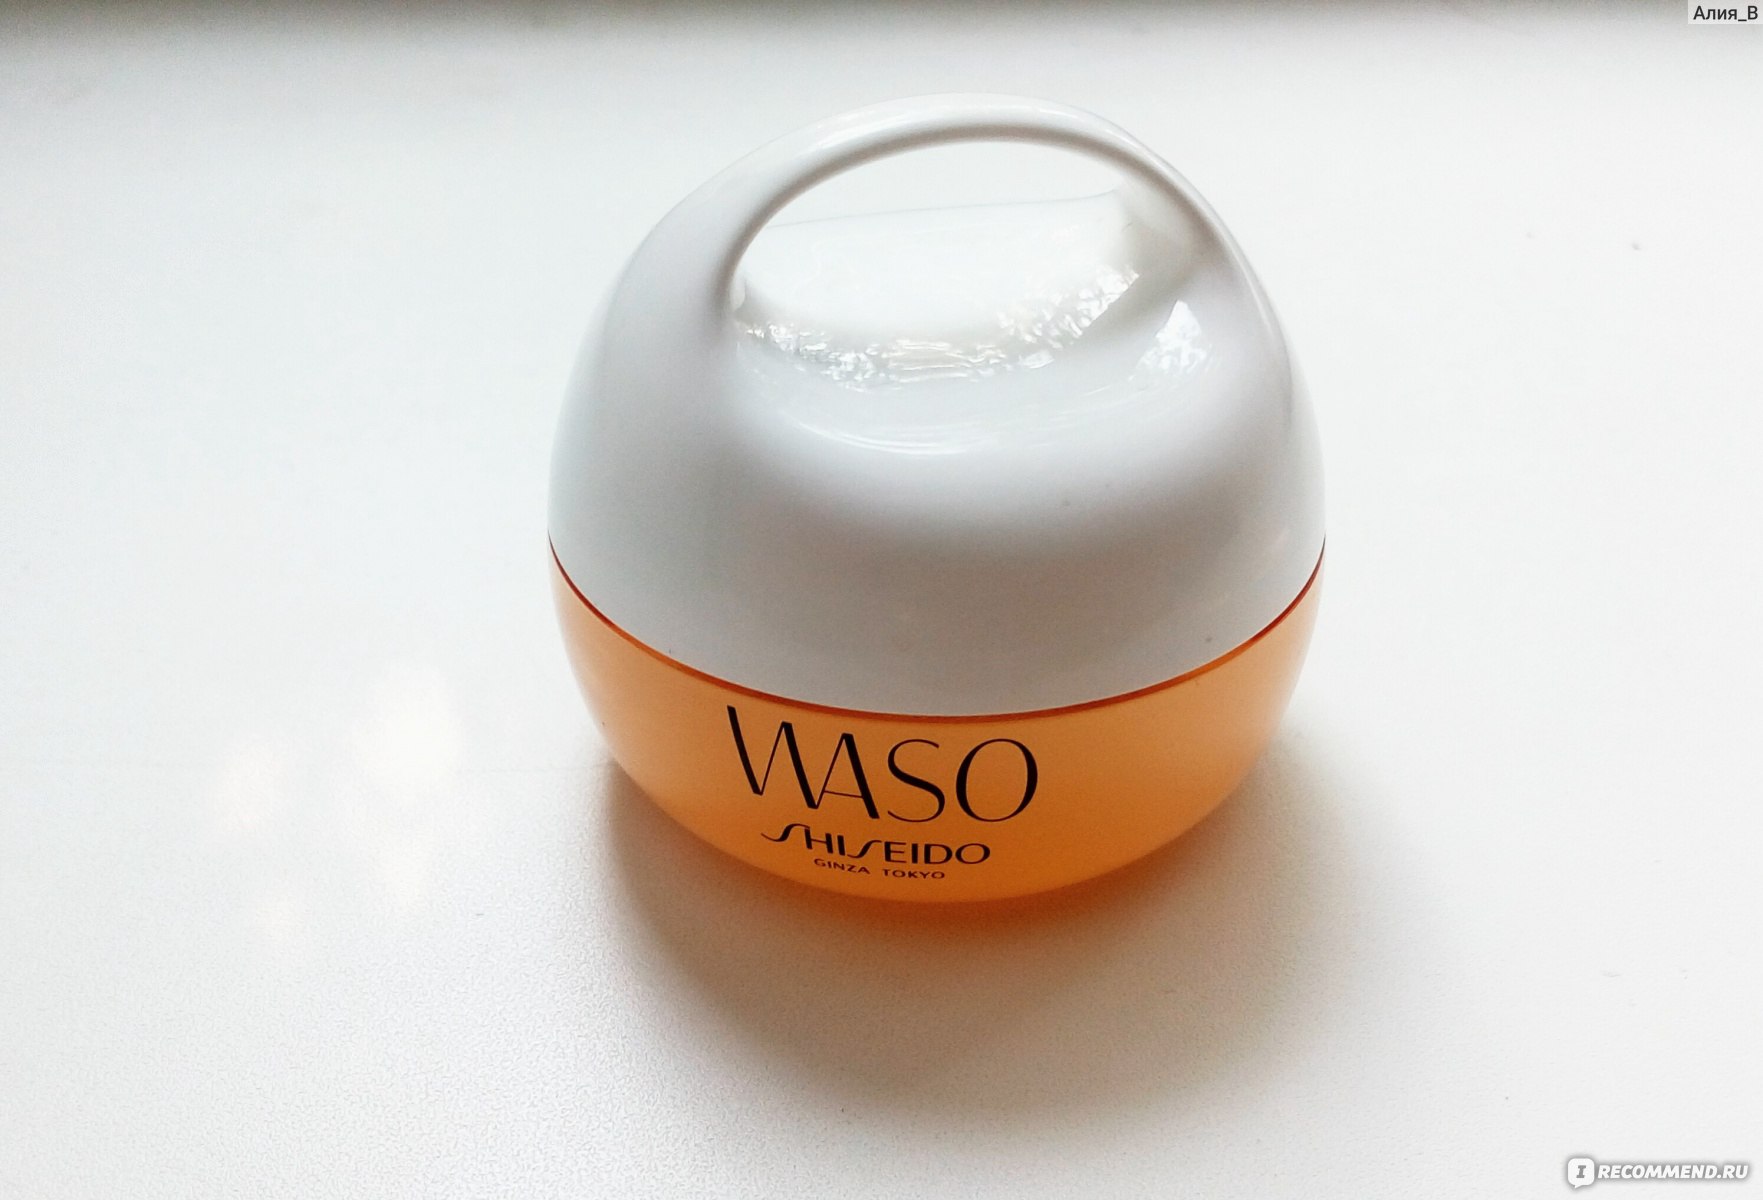 Крем shiseido waso. Waso мега-увлажняющий крем. Крем шисейдо Васо для лица. Shiseido Waso увлажняющий крем.